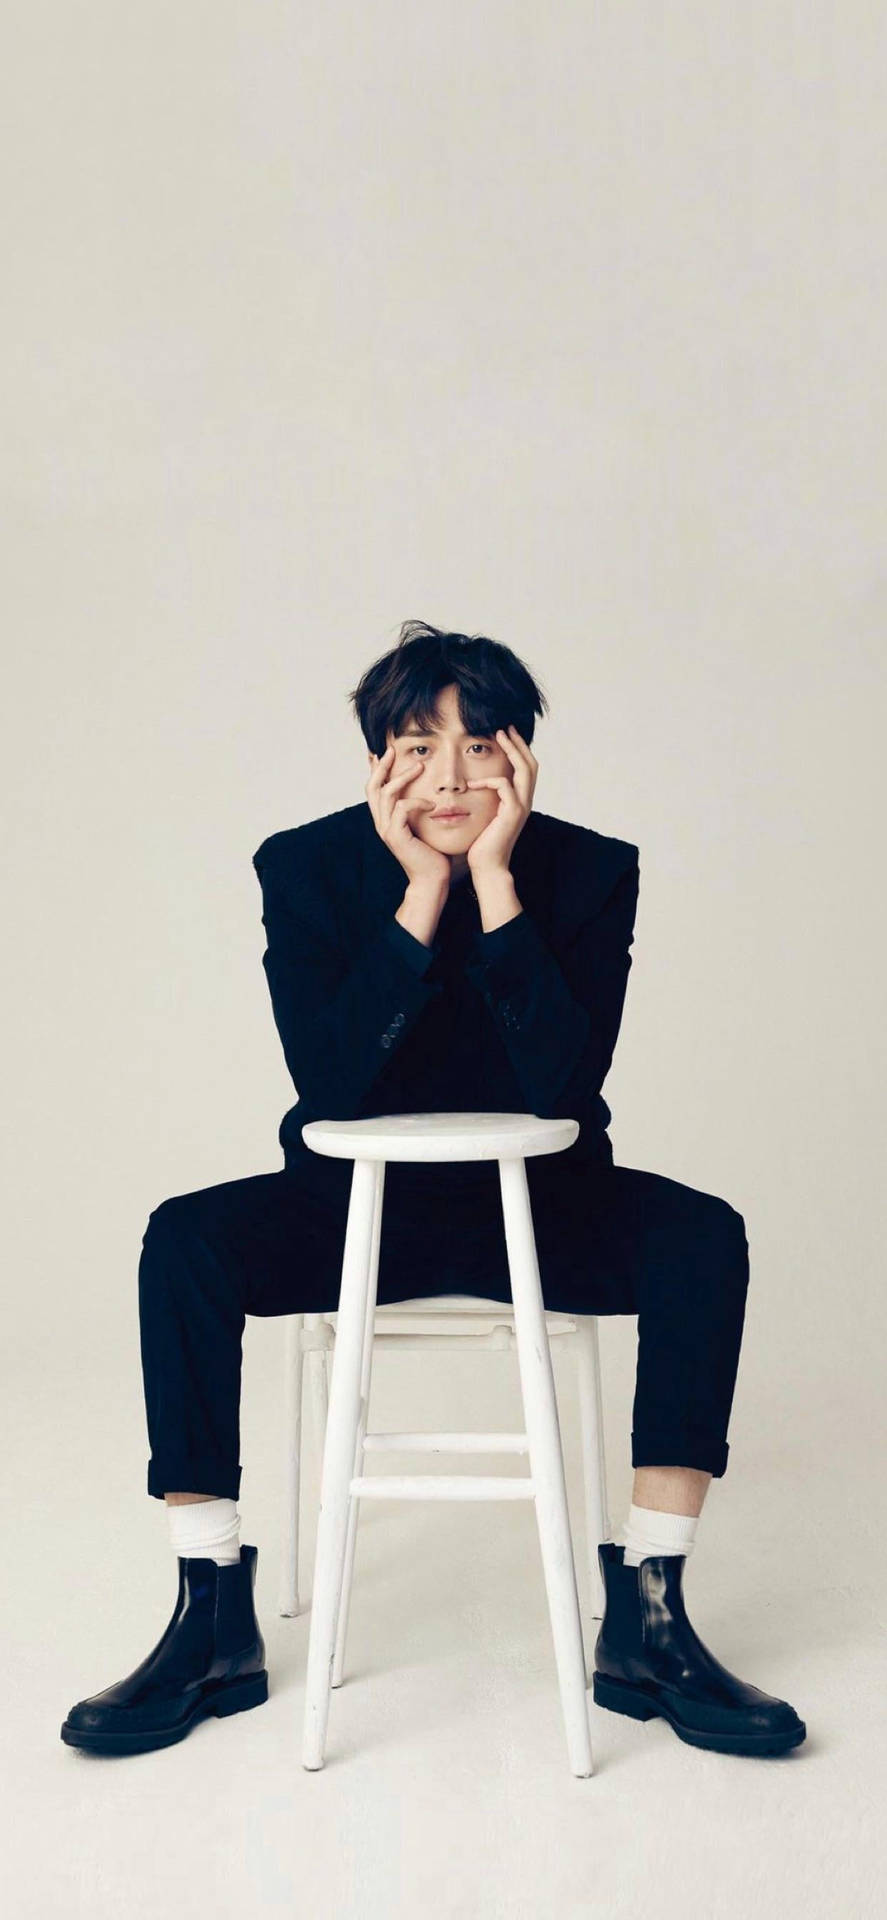 Kim Seon Ho sitting casually on a chair. Wallpaper